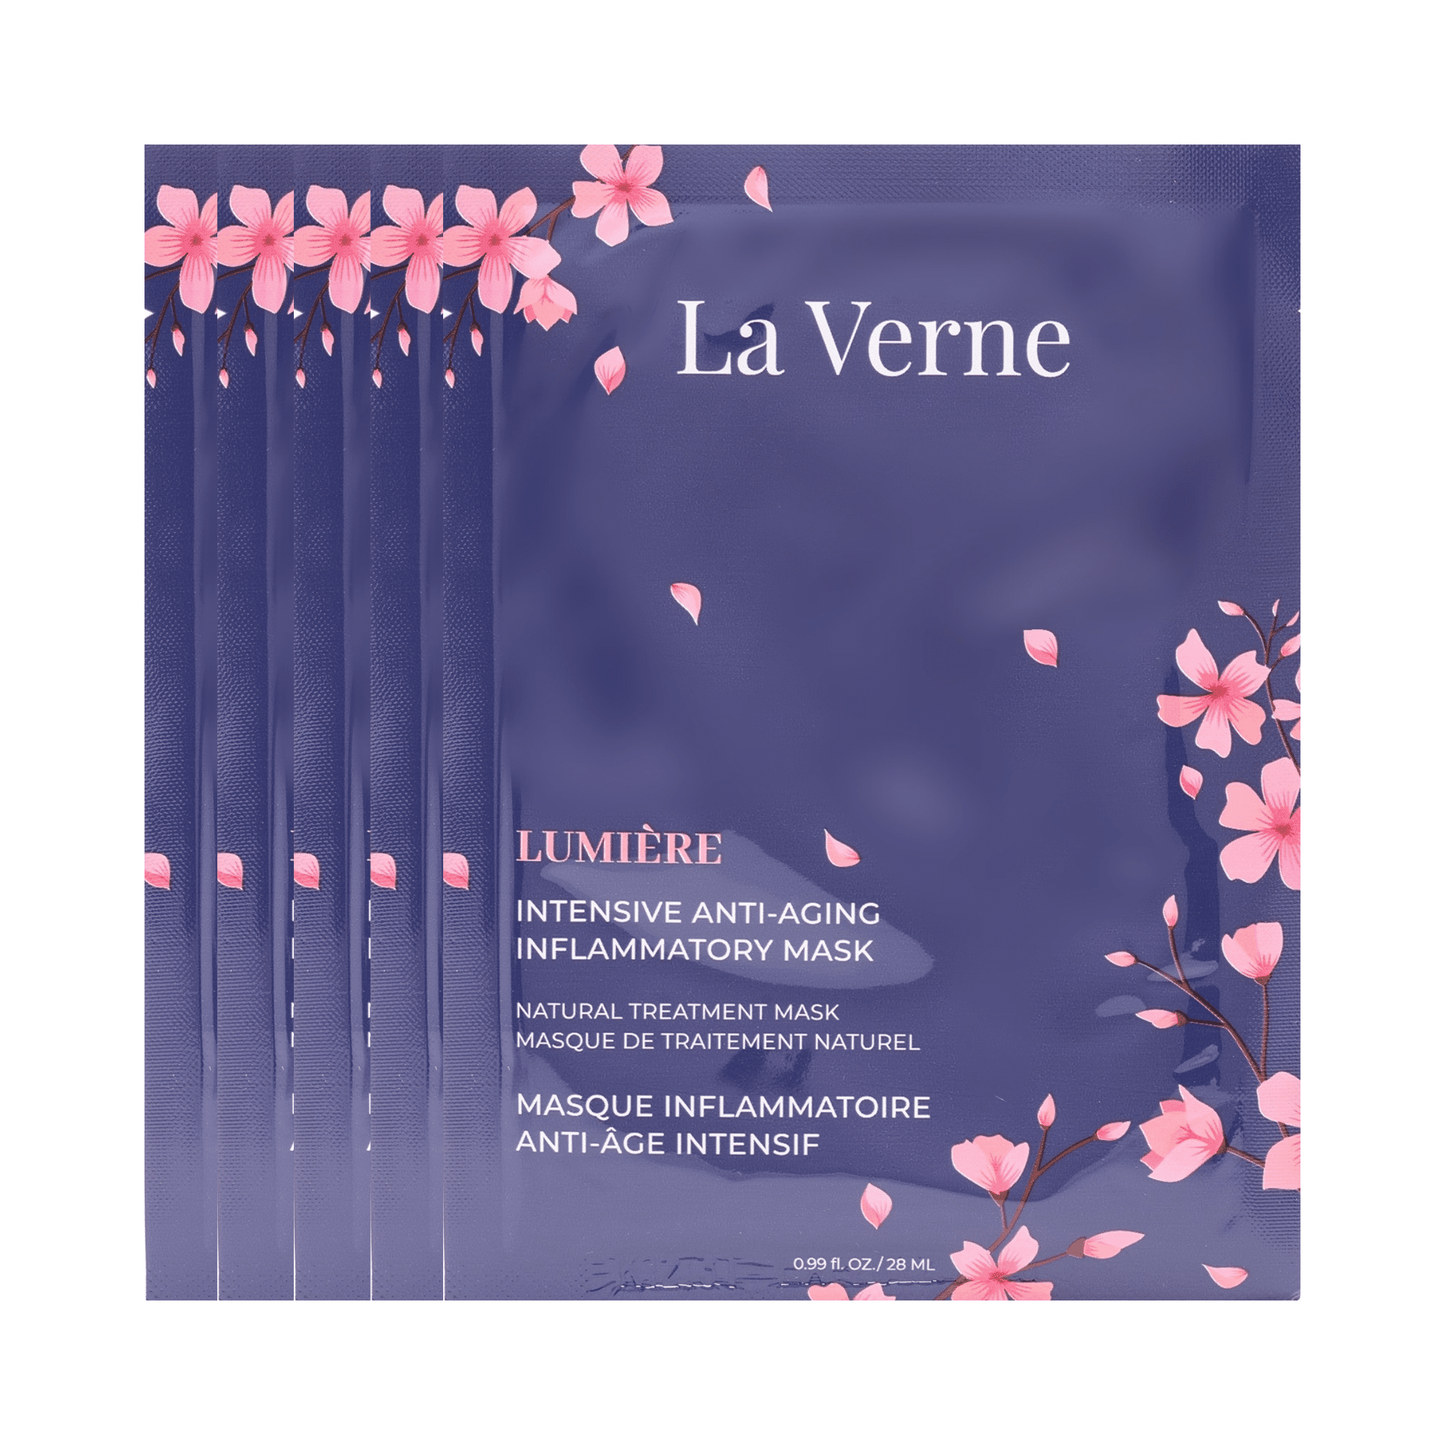 La Verne Lumiere Intensive Anti-Aging Anti-Inflammatory Mask MiessentialStore